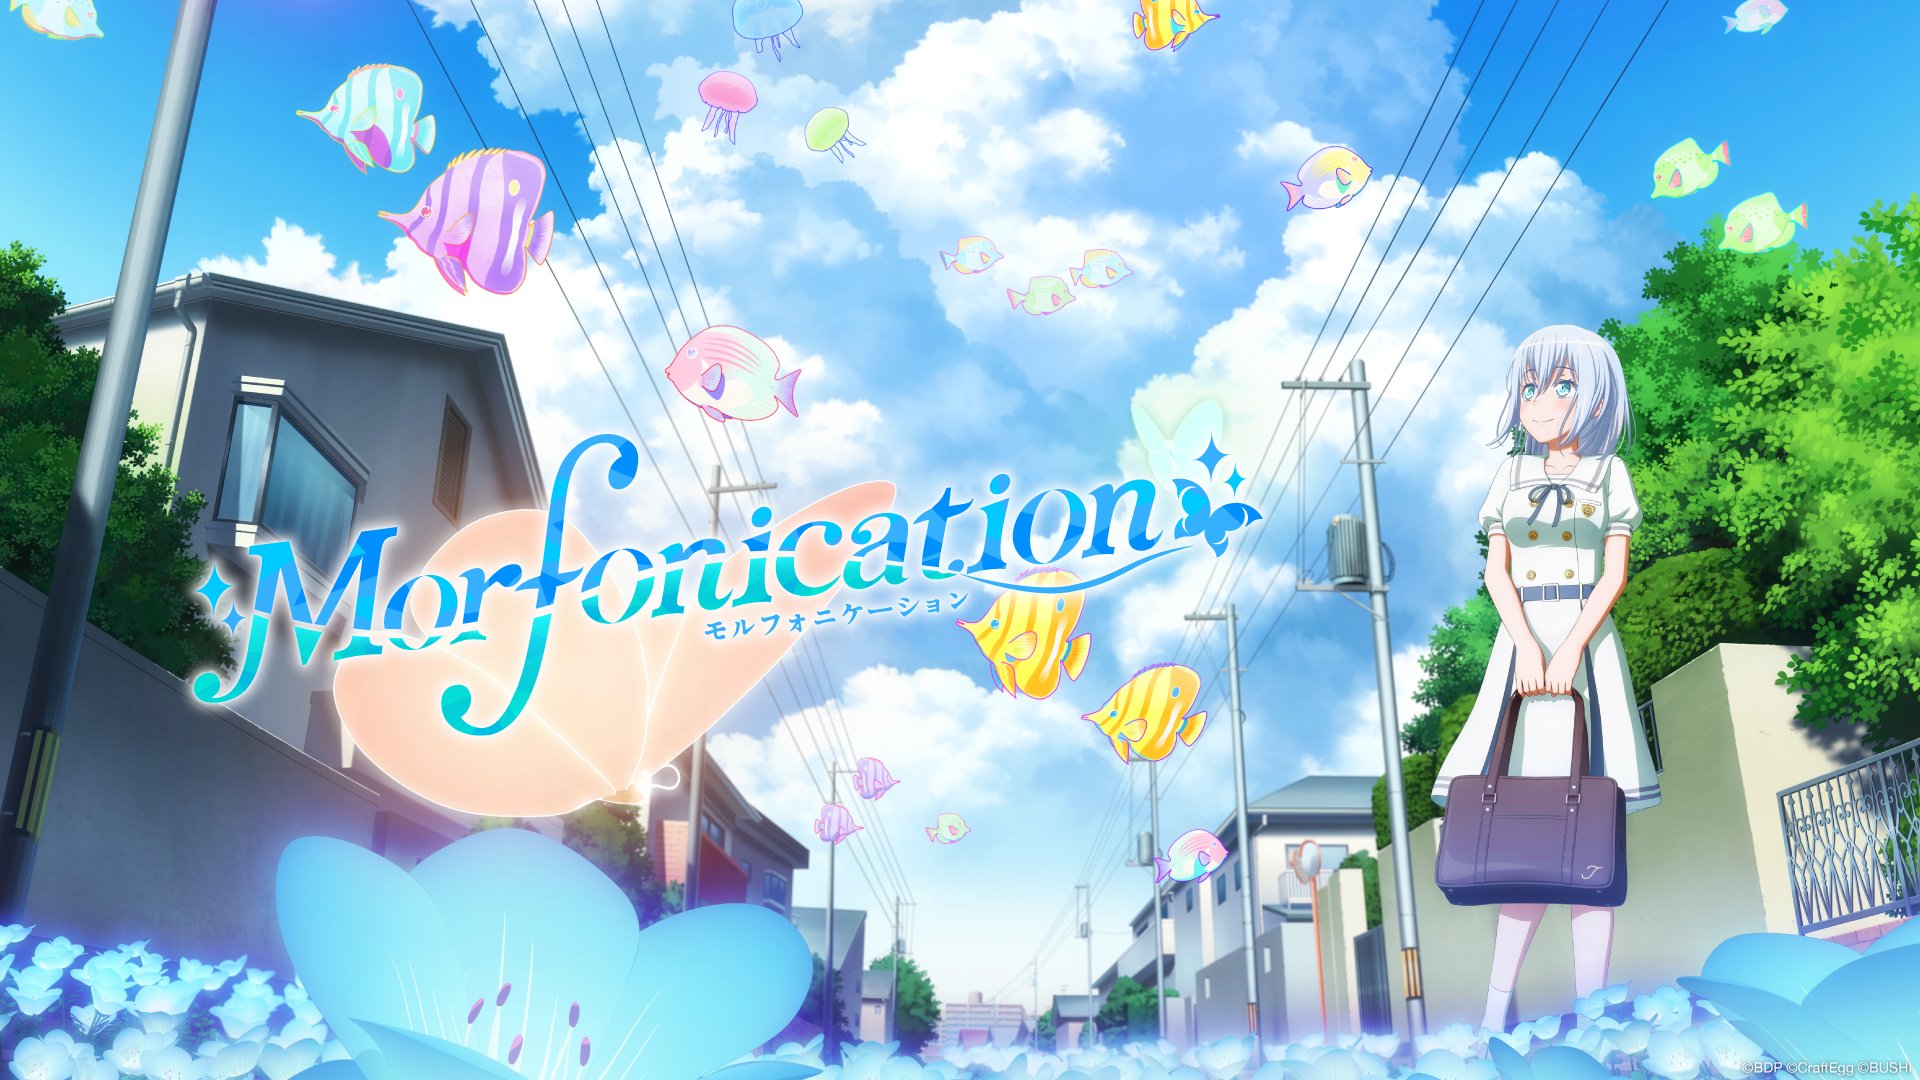 Smile of the Arsnotoria” TV Anime Adaptation Announced — Yuri